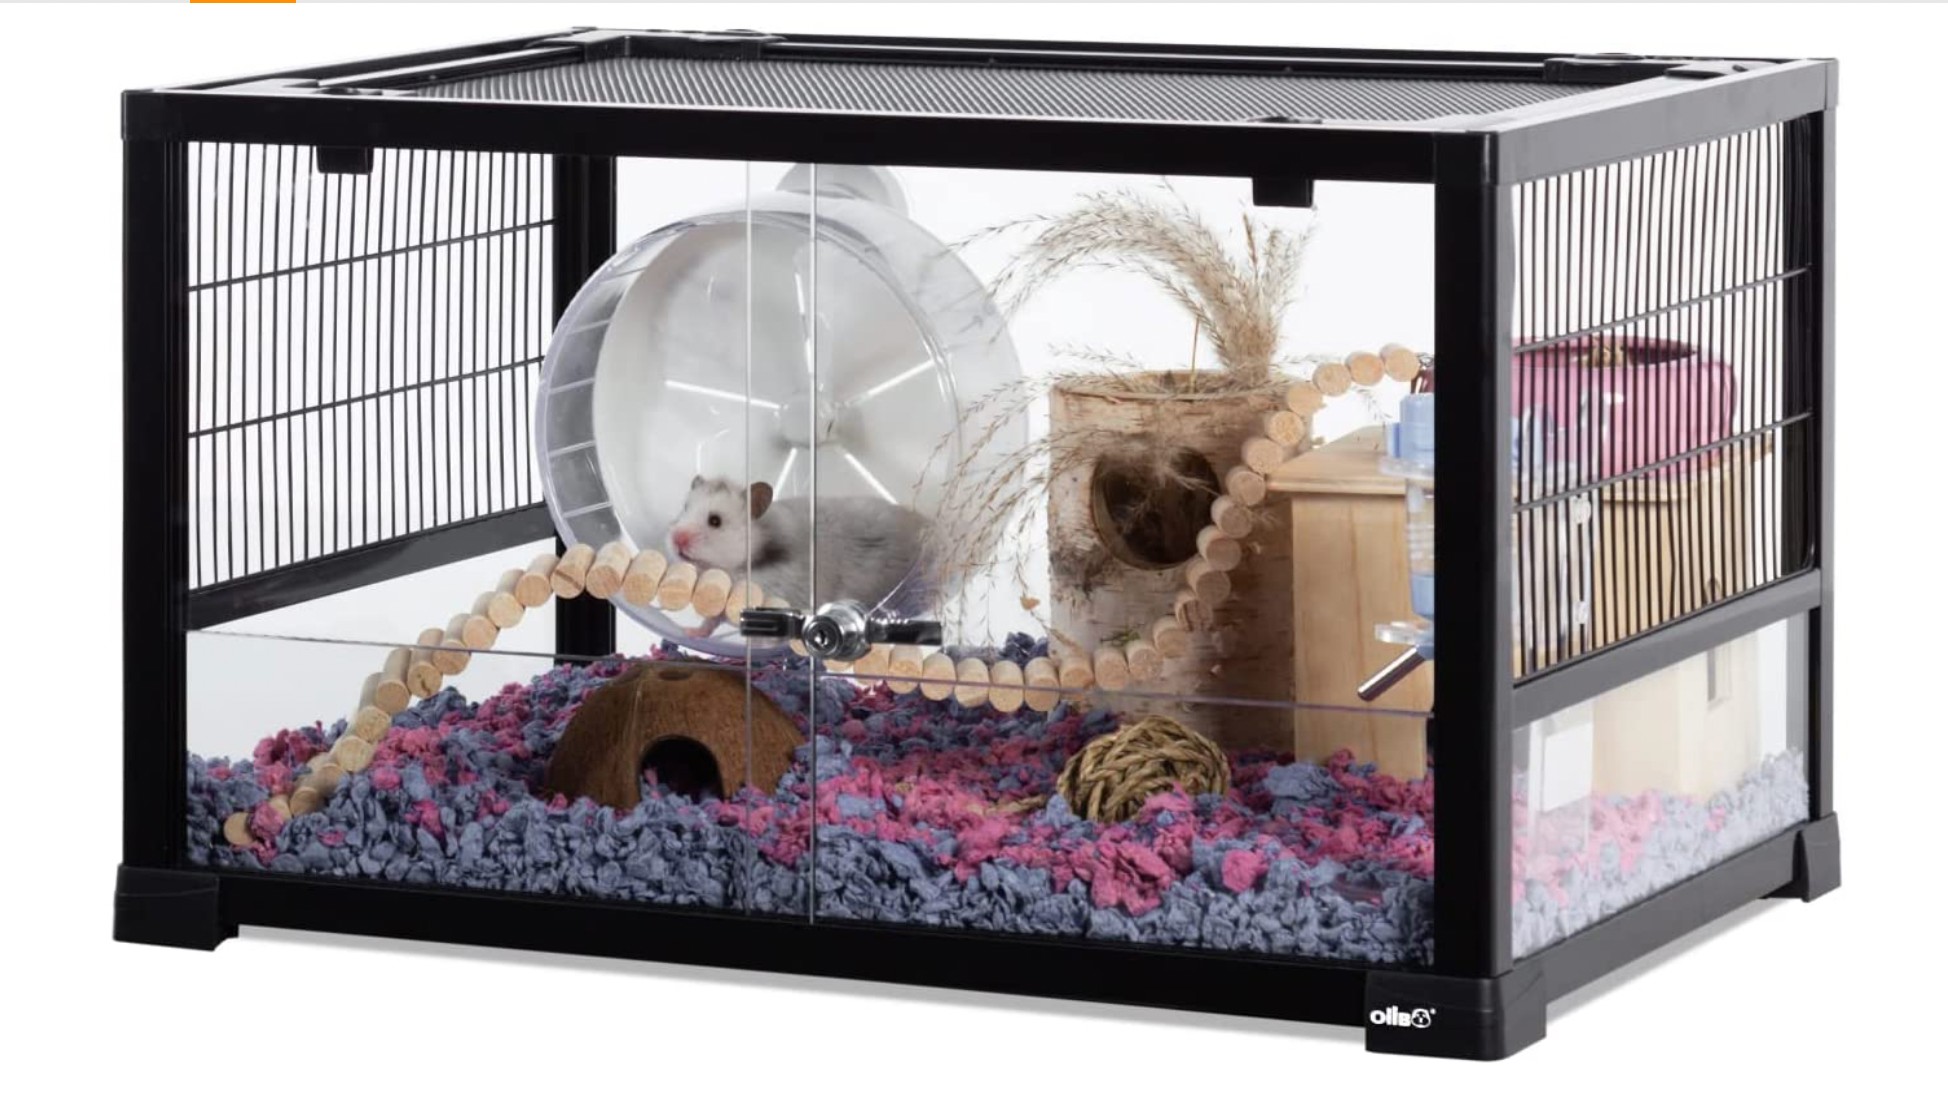 OIIBO 23 Gallon Glass Large Hamster Cage